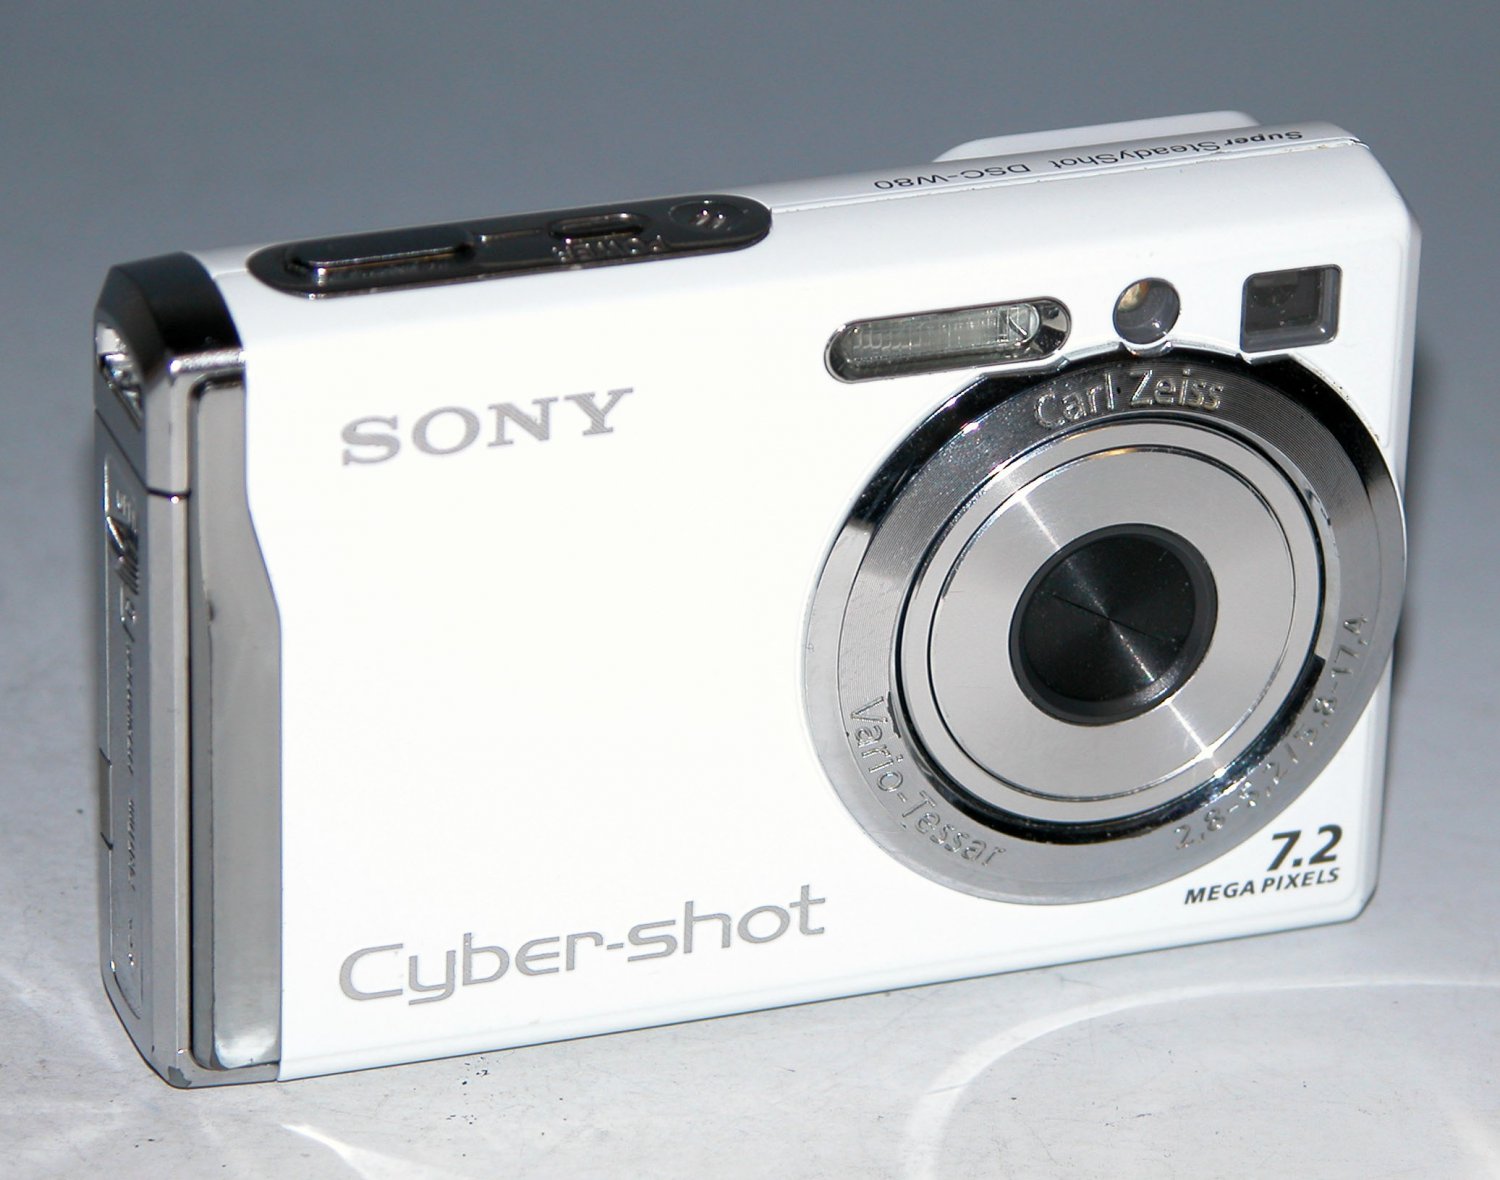 Sony Cyber-shot DSC-W80 7.2MP Digital Camera - White